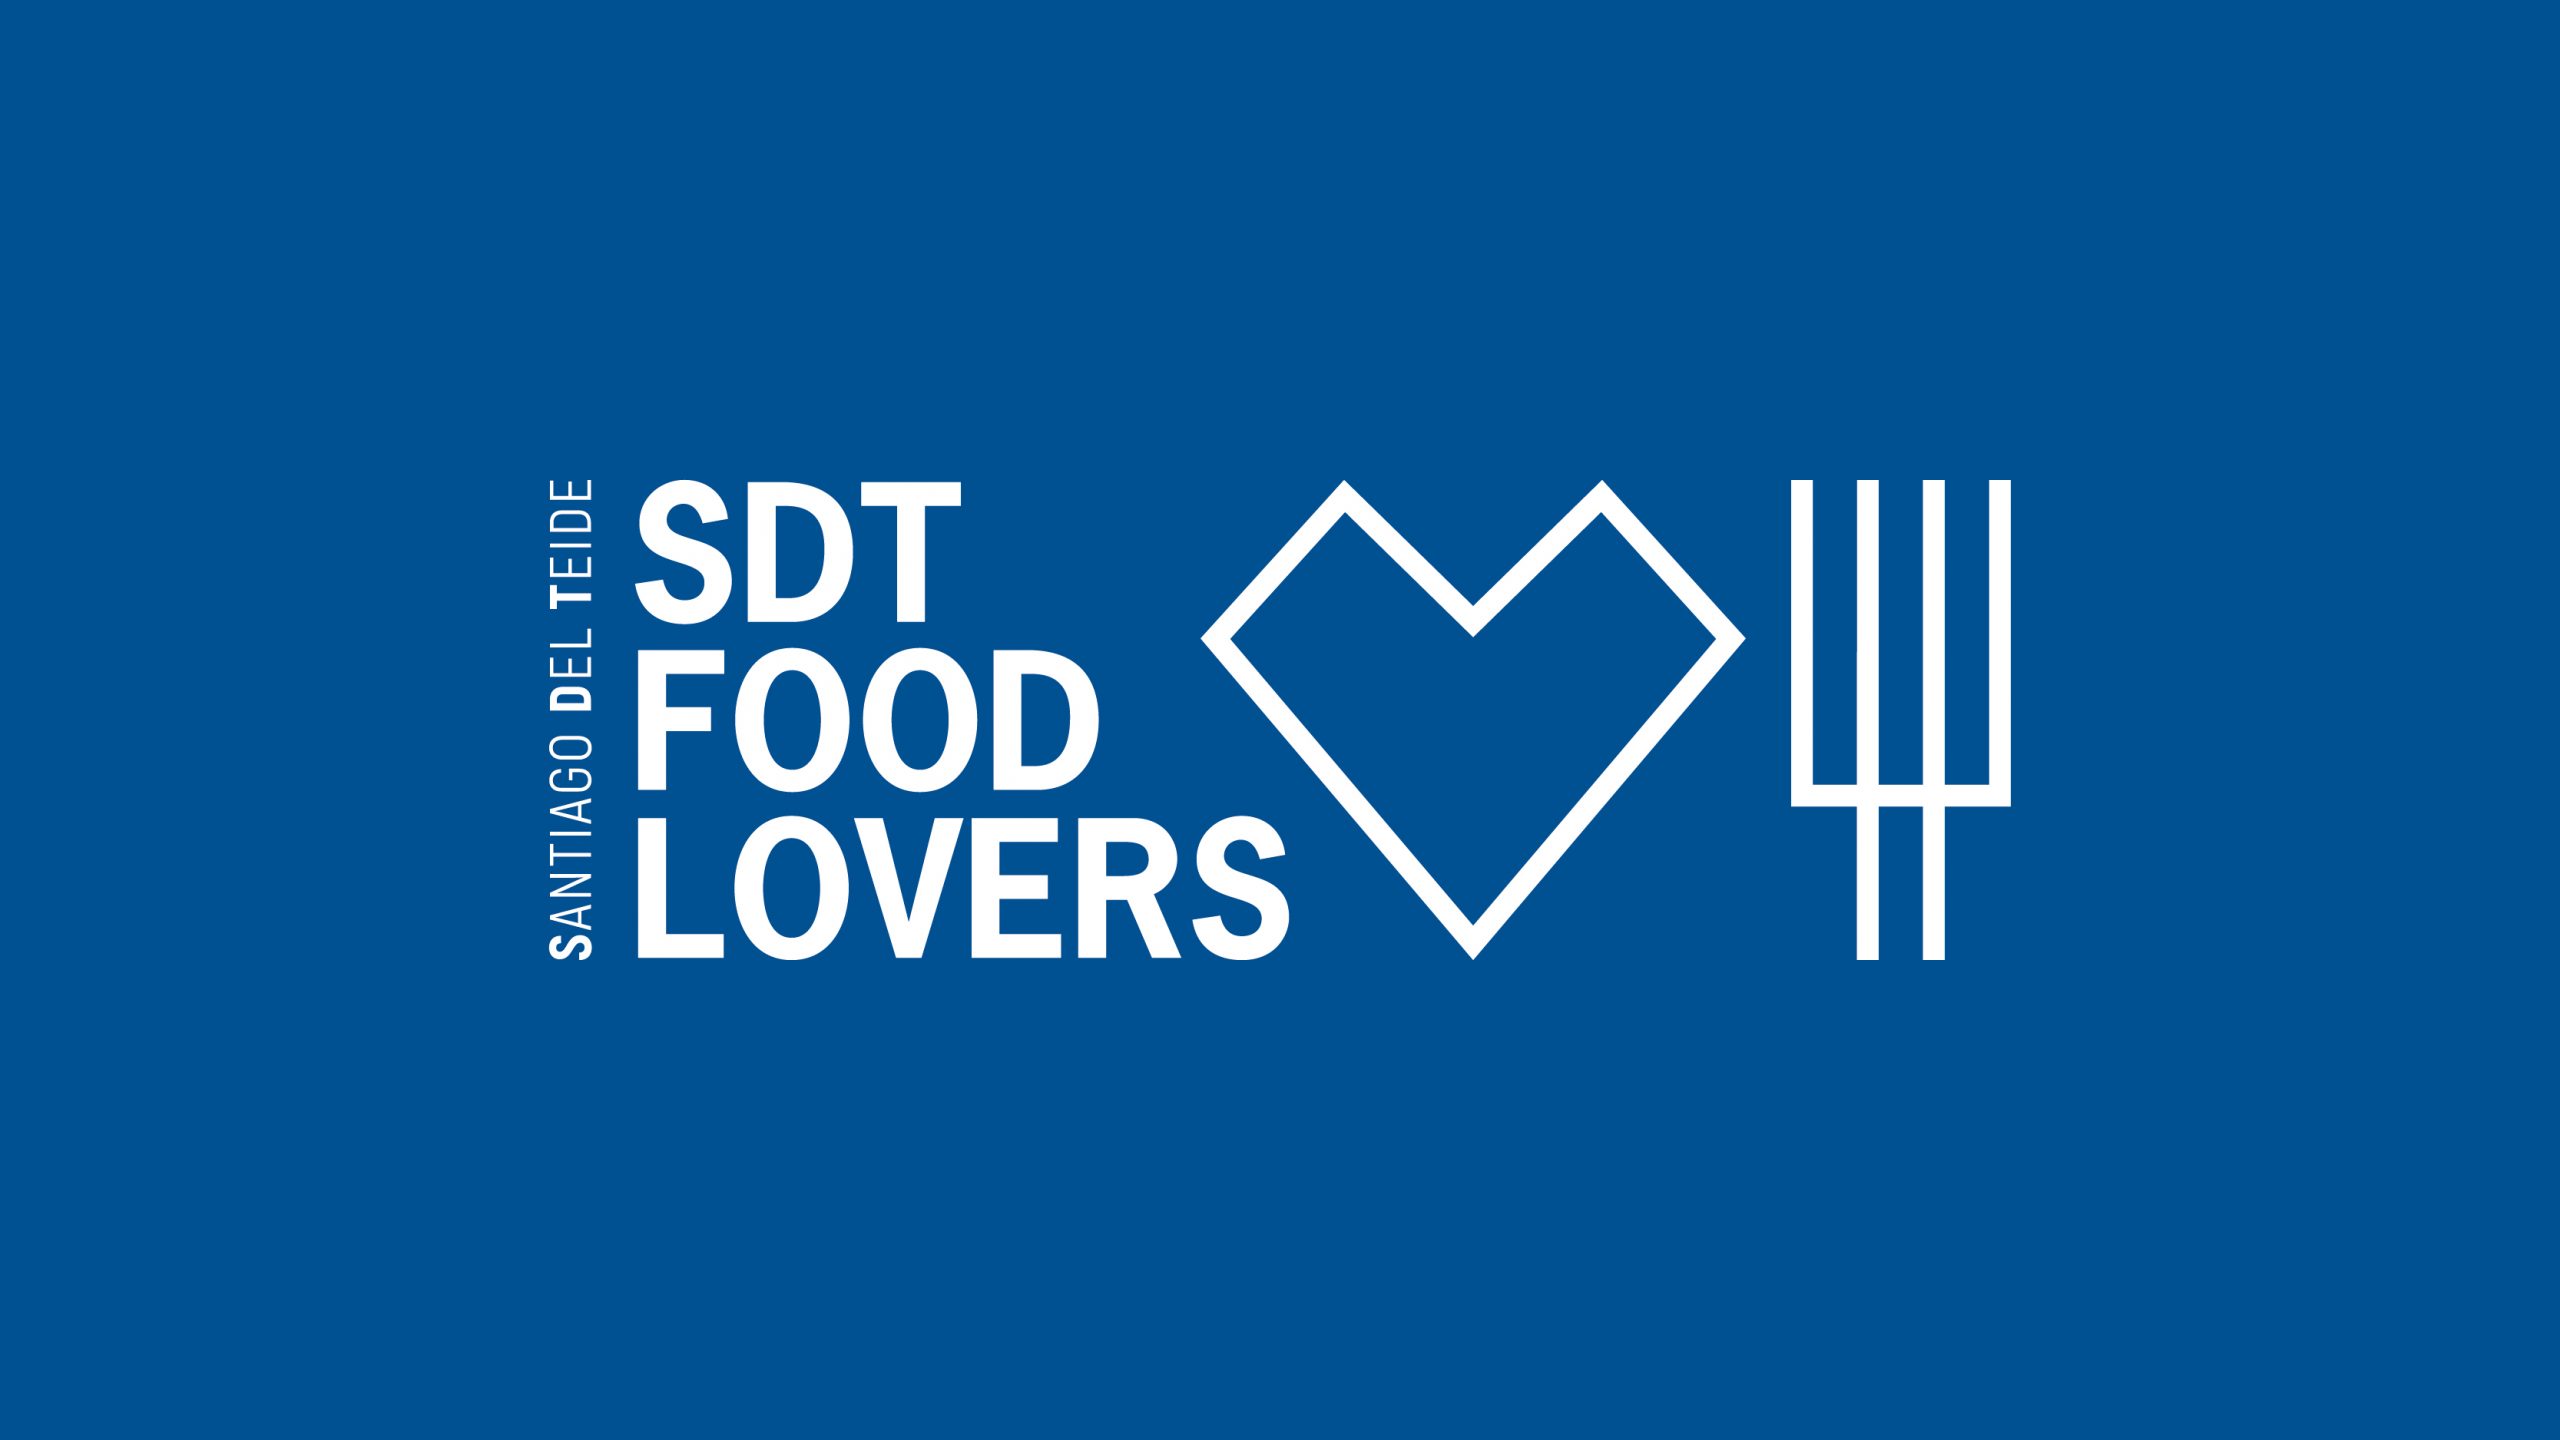 SDT FOOD LOVERS LOGO